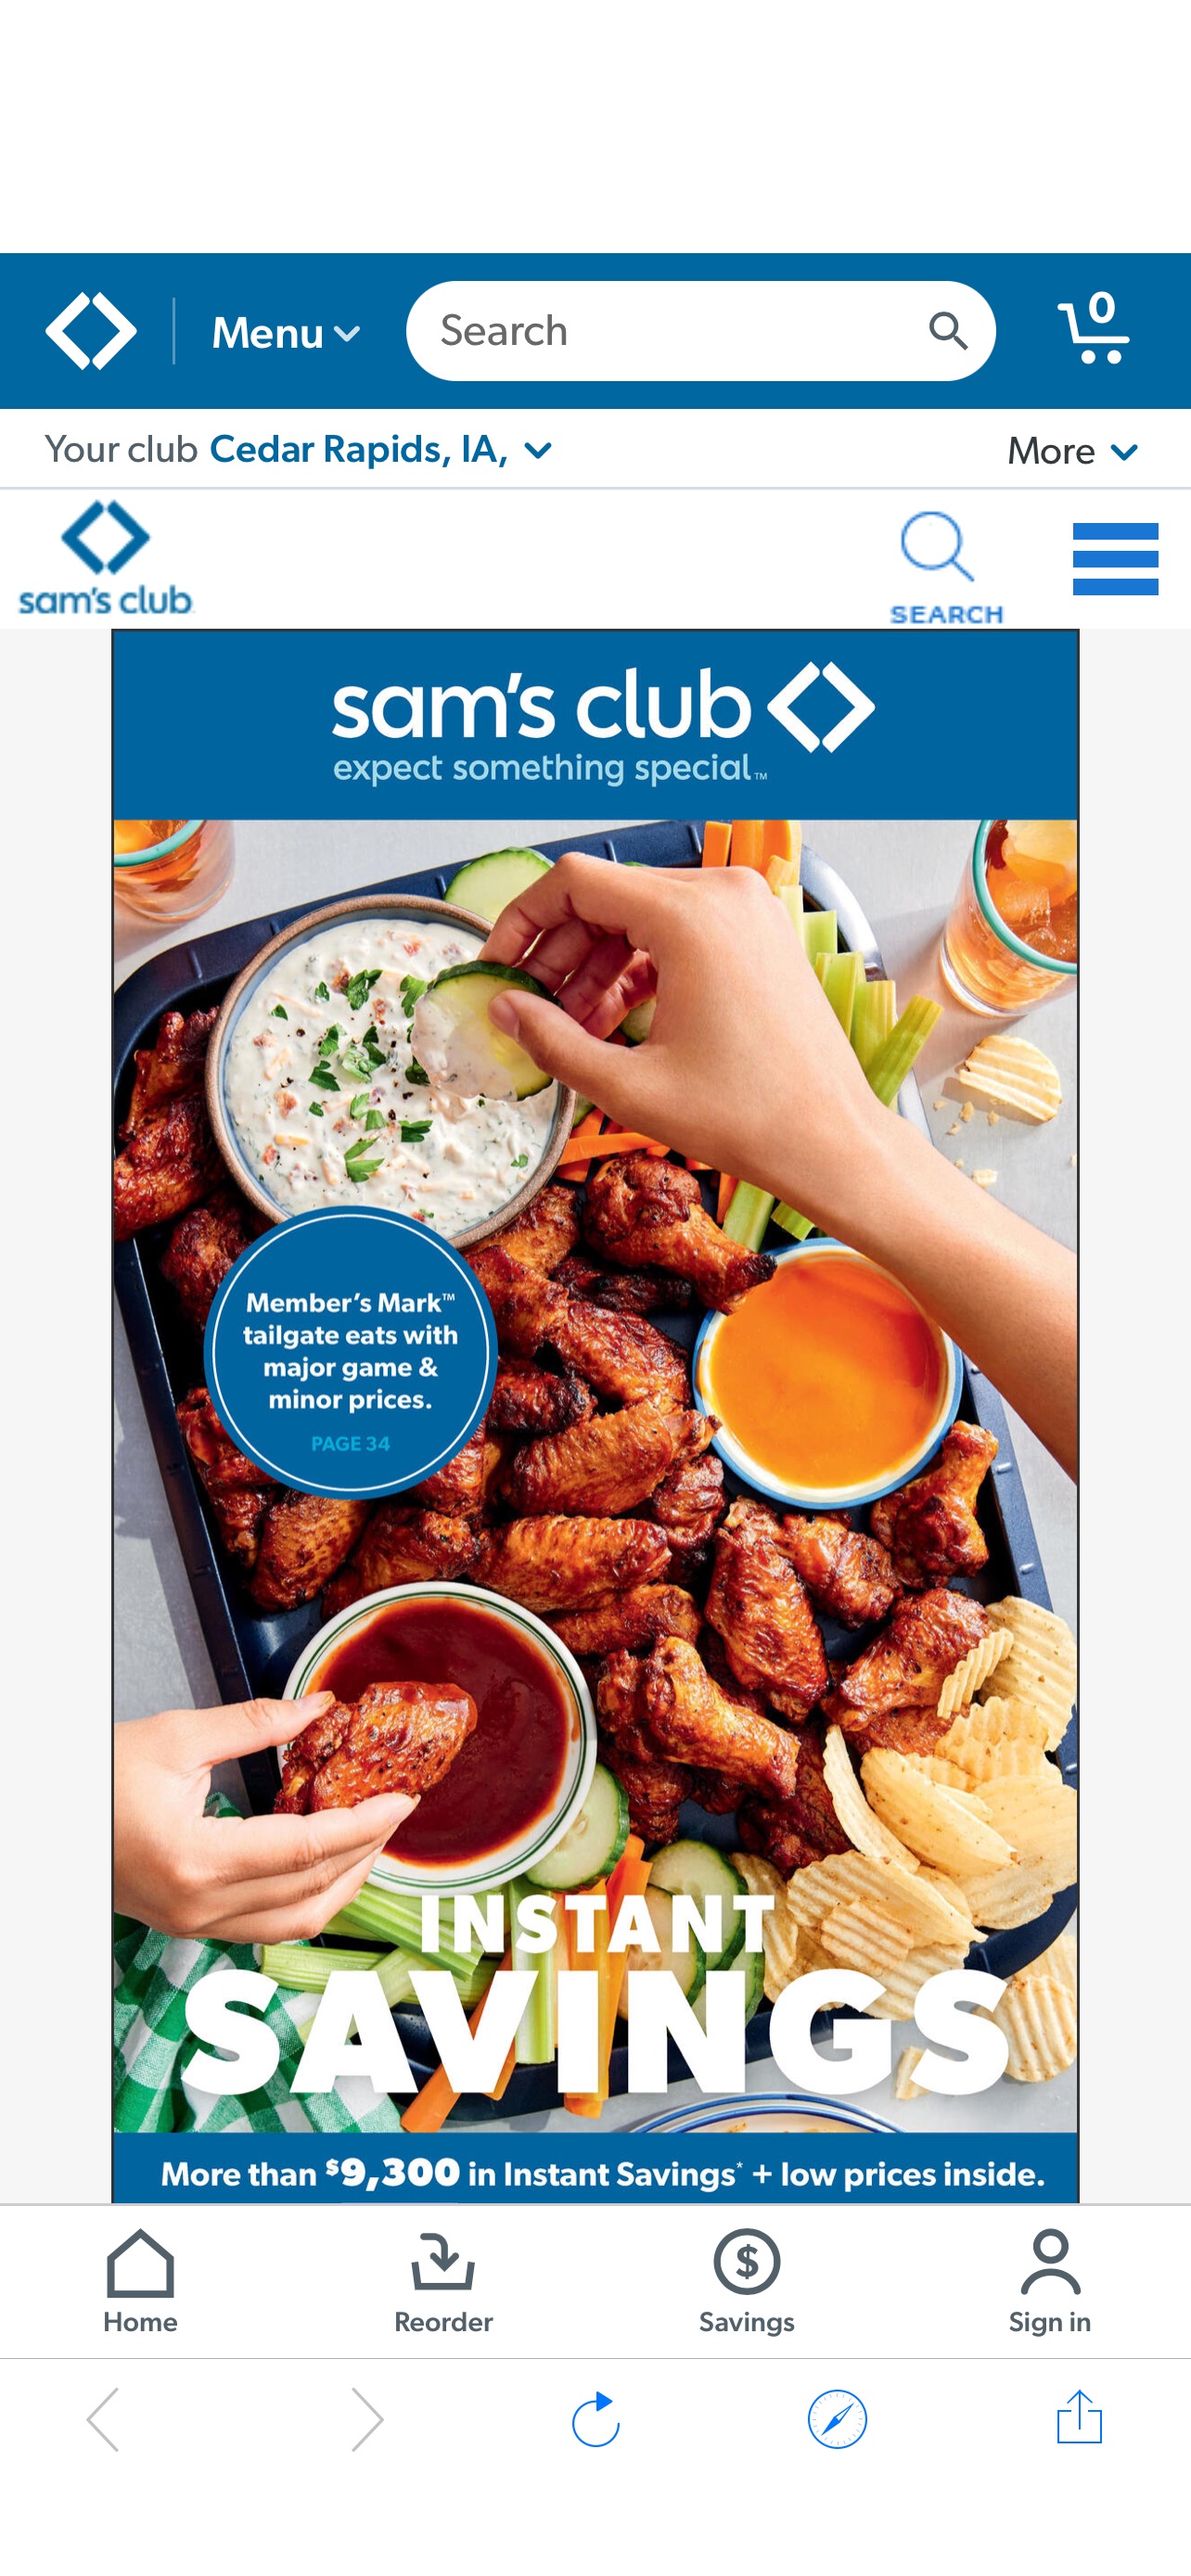 Instant Savings Book - Starts 8/31- Sam's Club